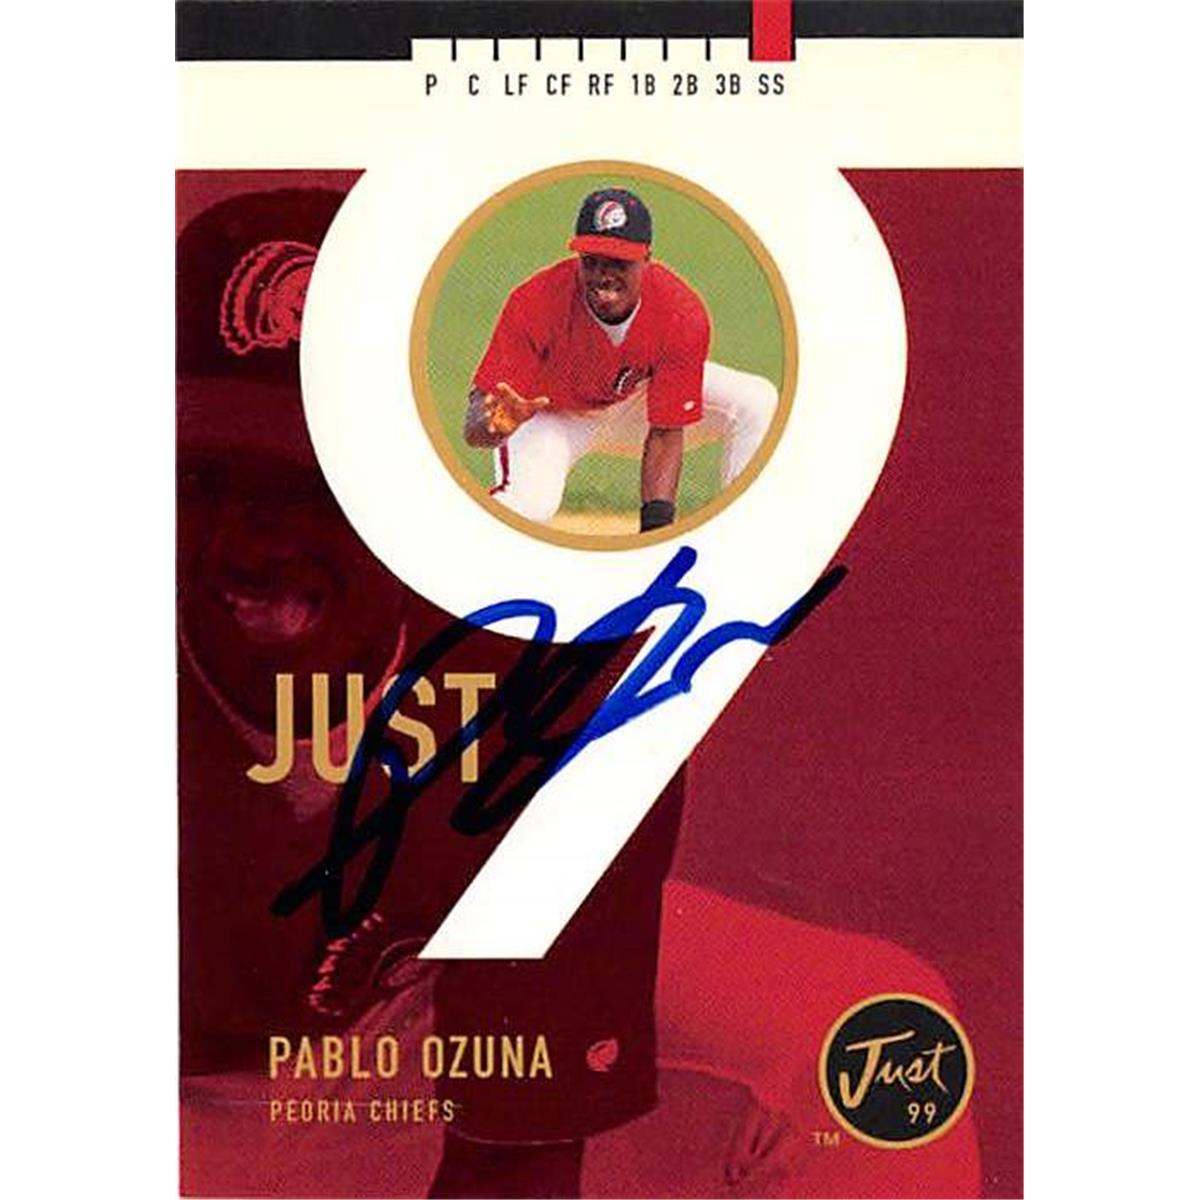 444144 Pablo Ozuna Autographed Baseball Card 1999 Just Minors No. J908 for Peoria Chiefs Florida Marlins -  Autograph Warehouse